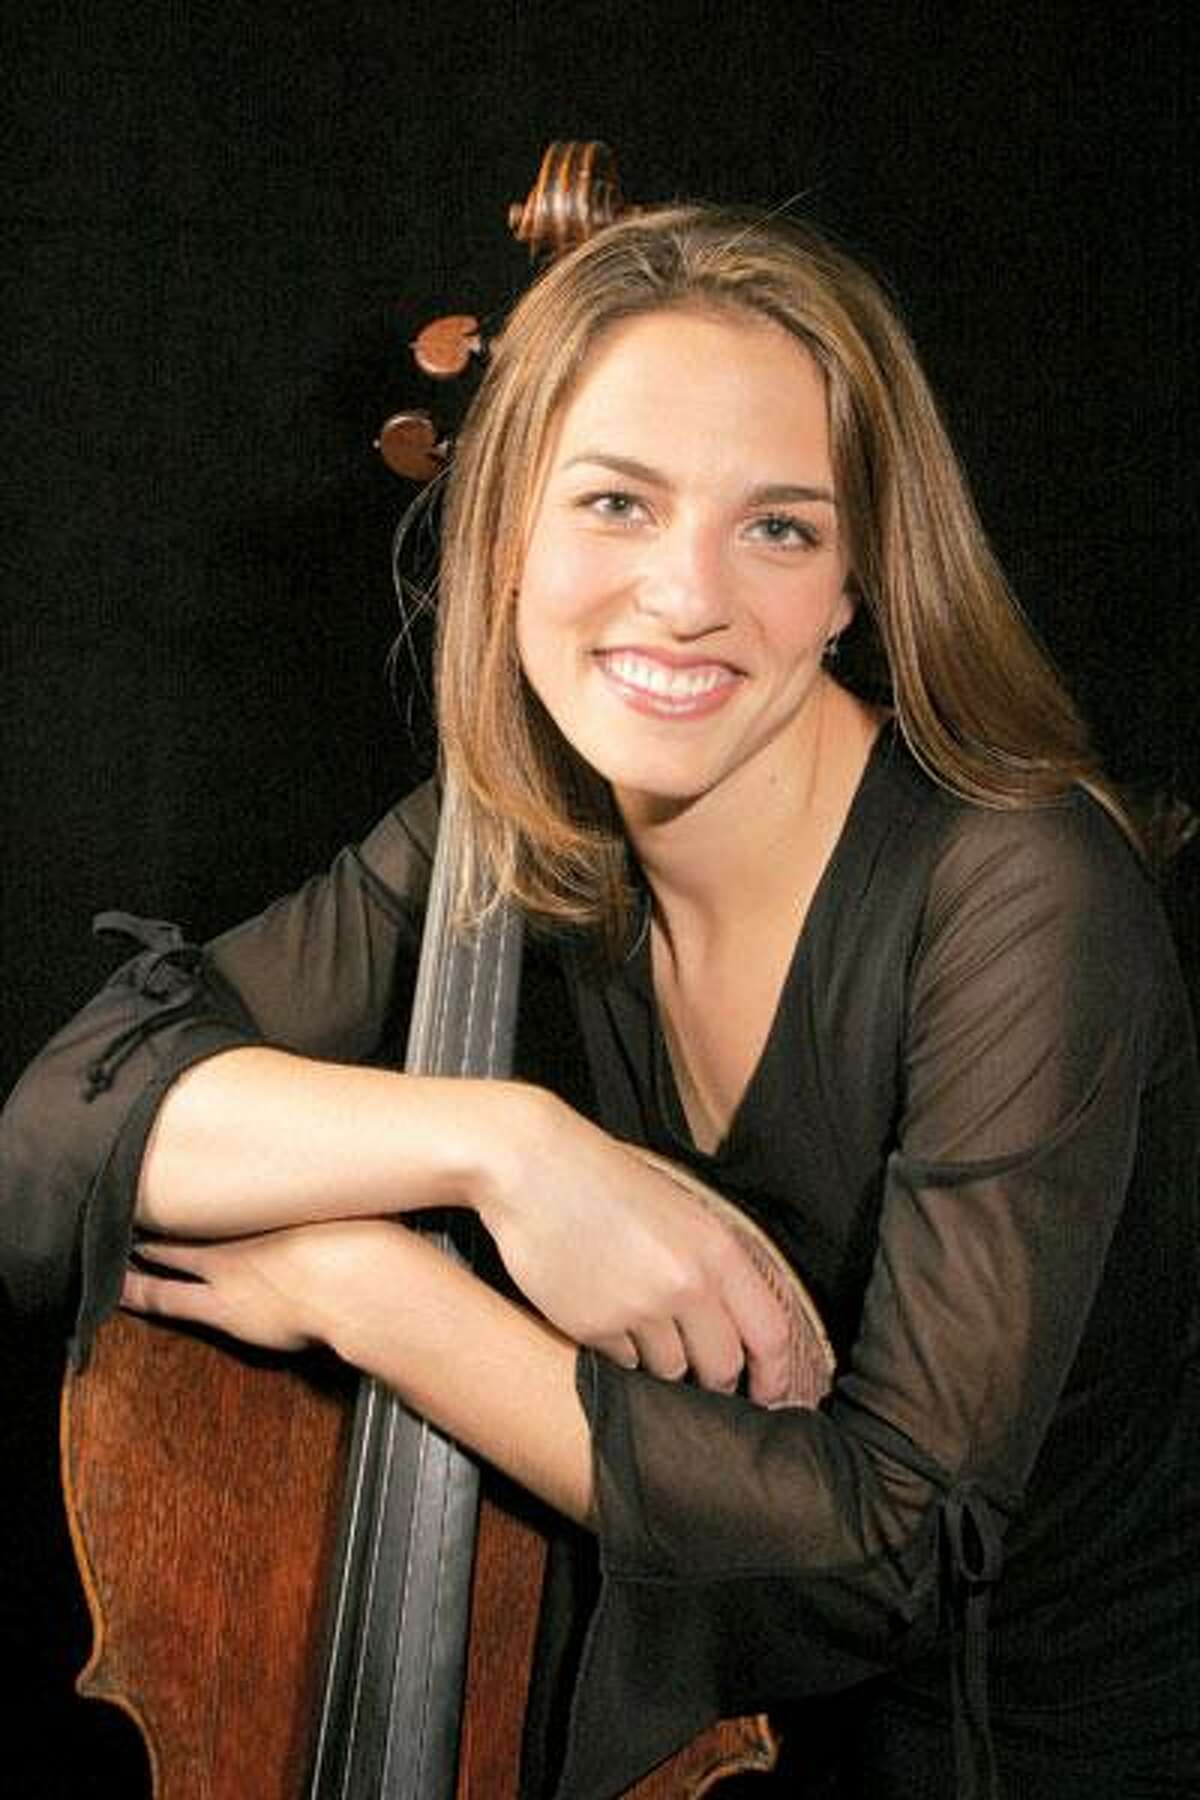 Cellist Julie Albers is part of the Aug. 13 concert. (Chester Higgins Jr.)